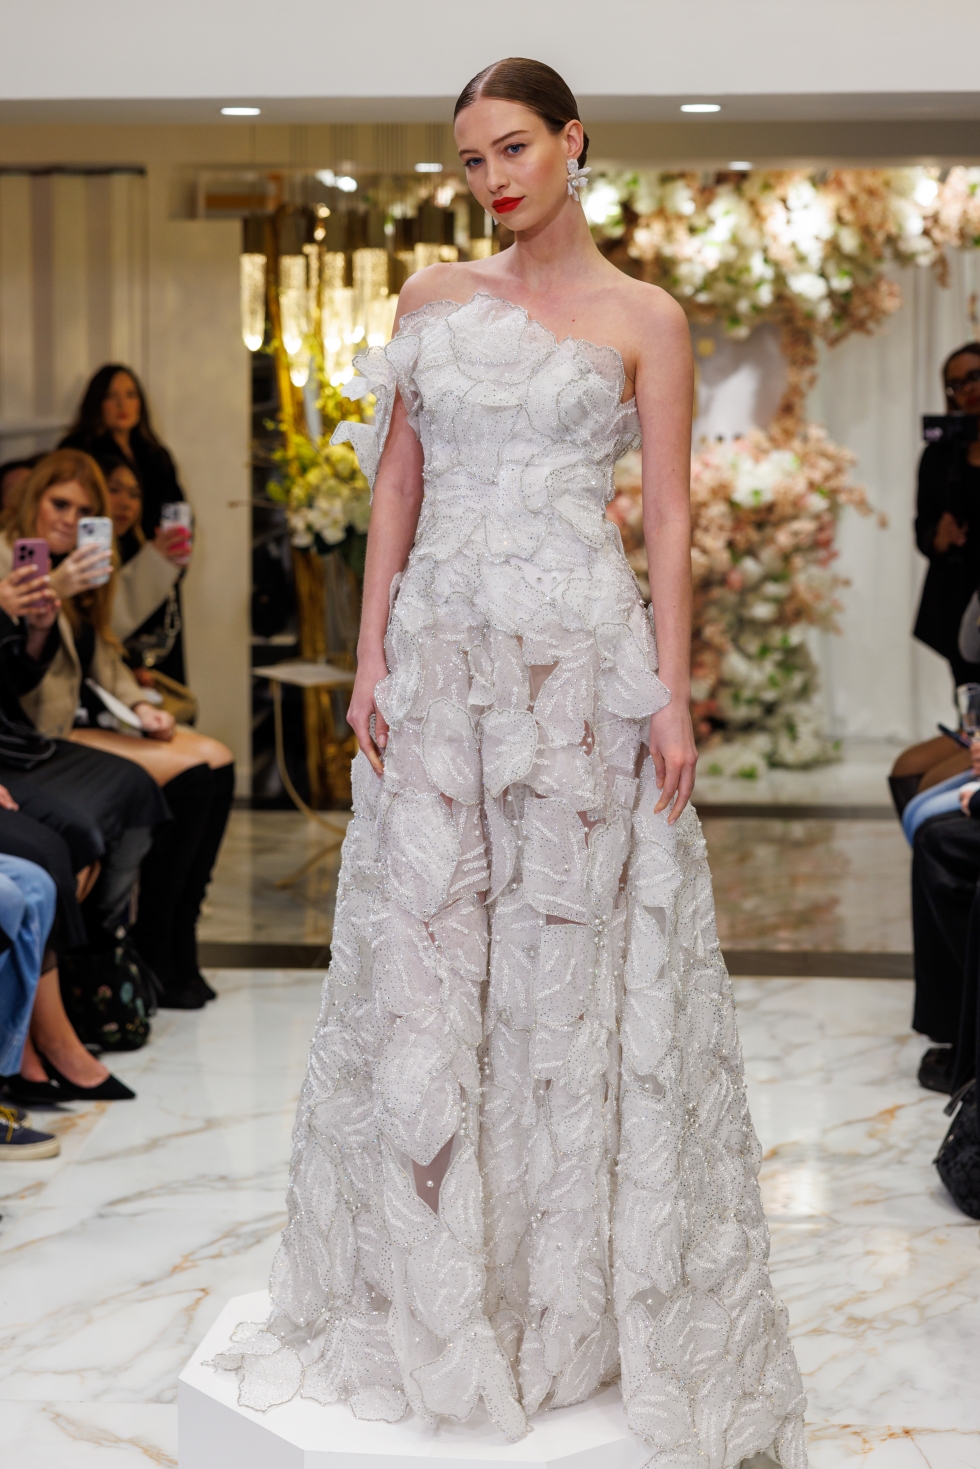 The 2025 Wedding Dress Collection by Esé Azénabor